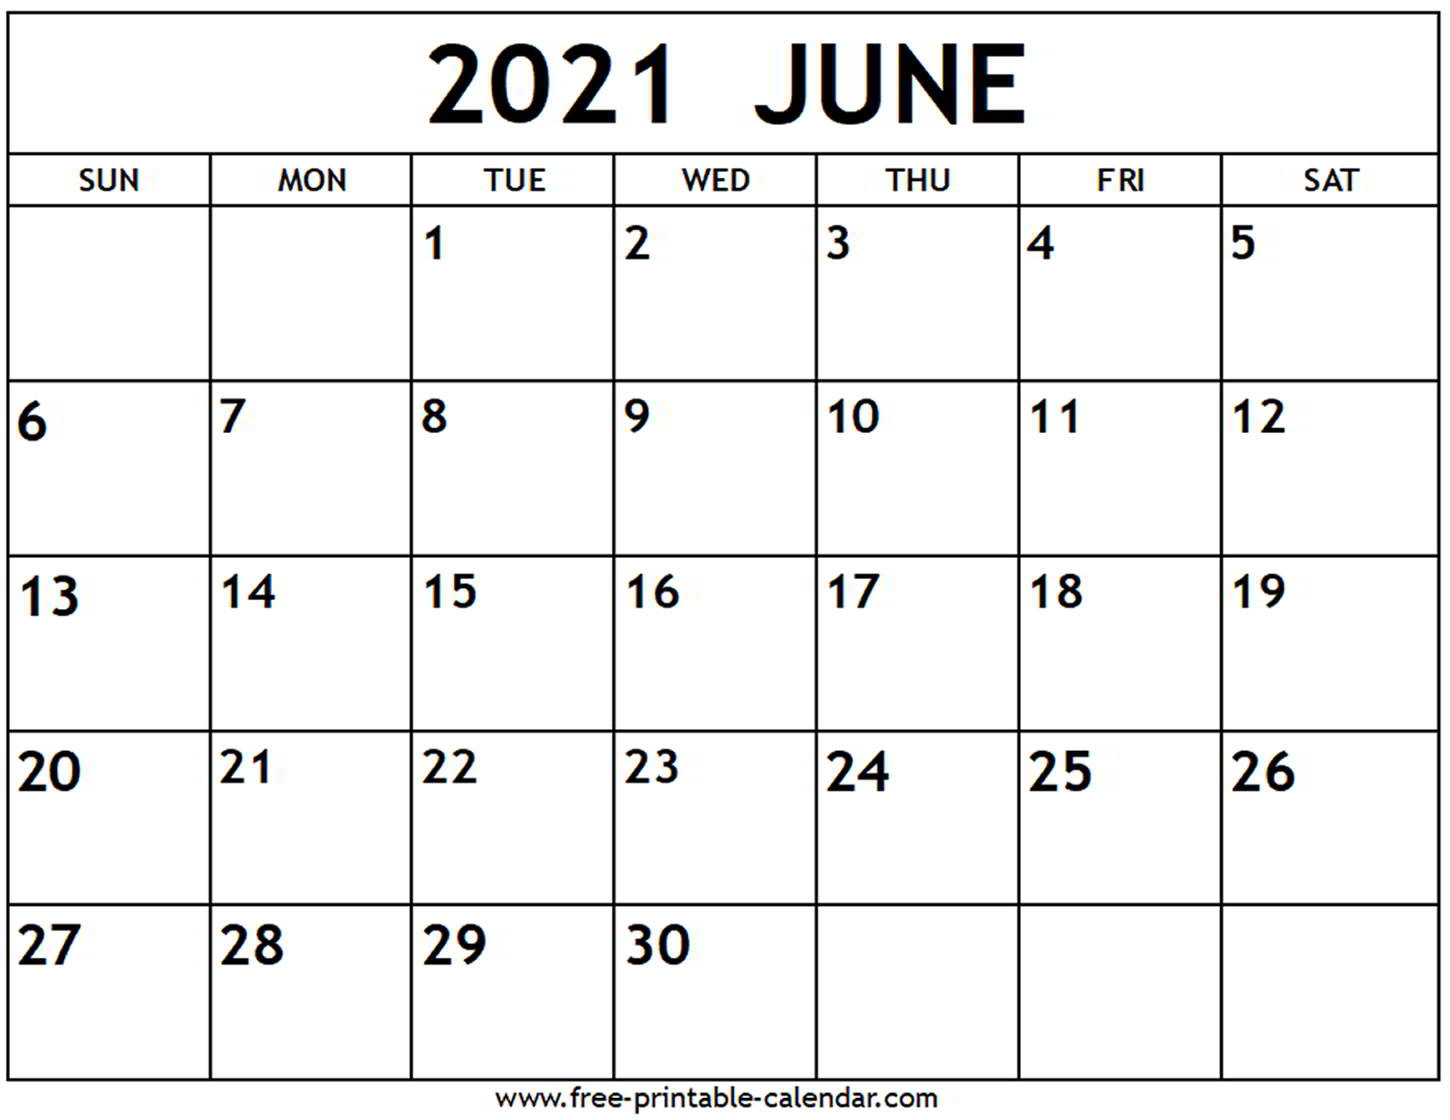 June 2021 Calendar - Free-Printable-Calendar